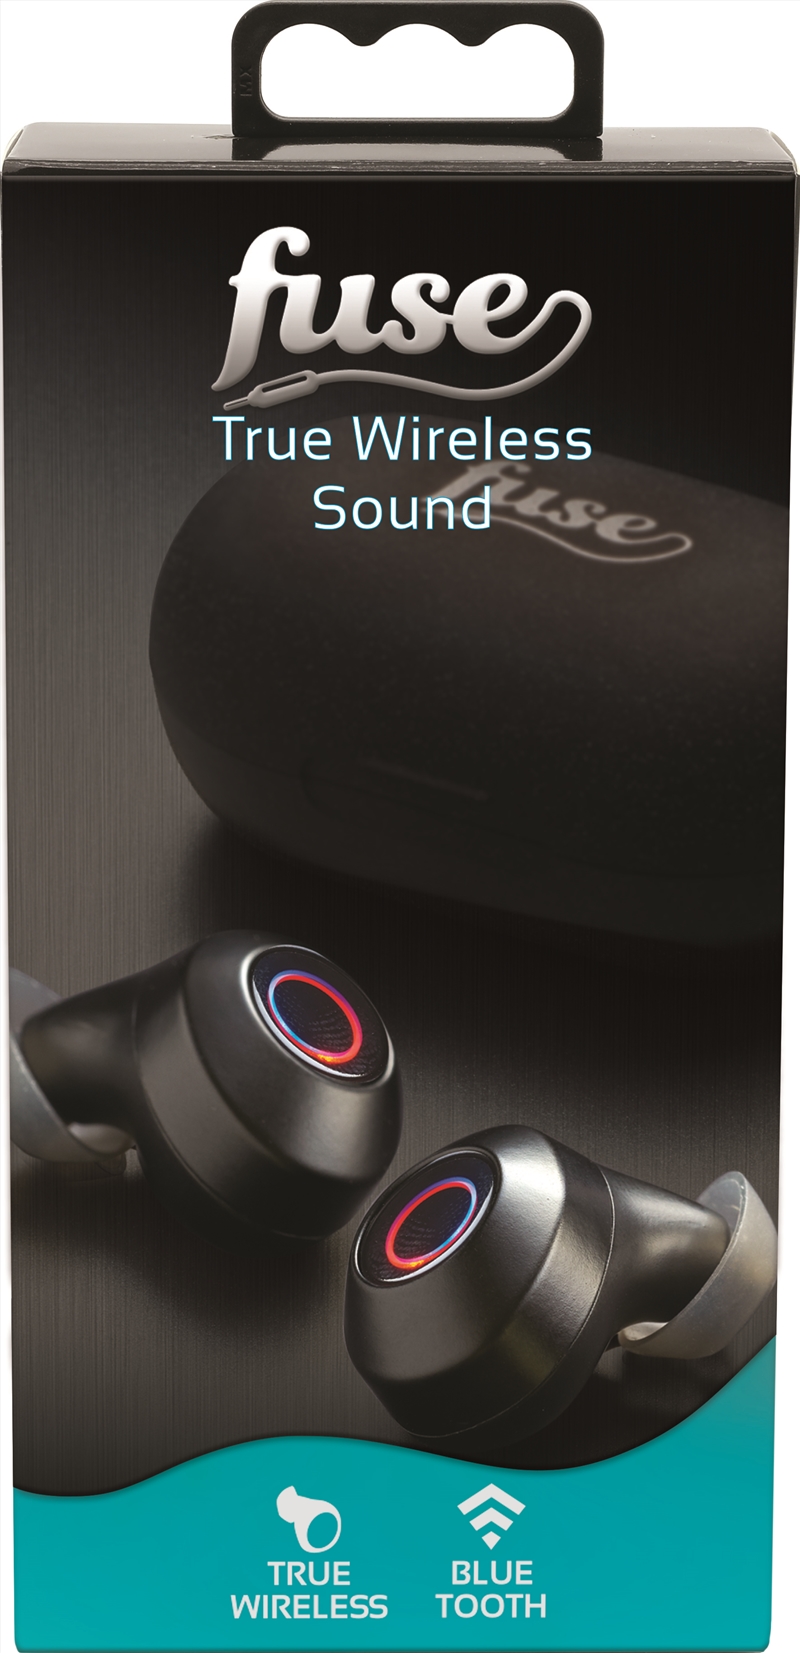 True Wireless Sound/Product Detail/Headphones